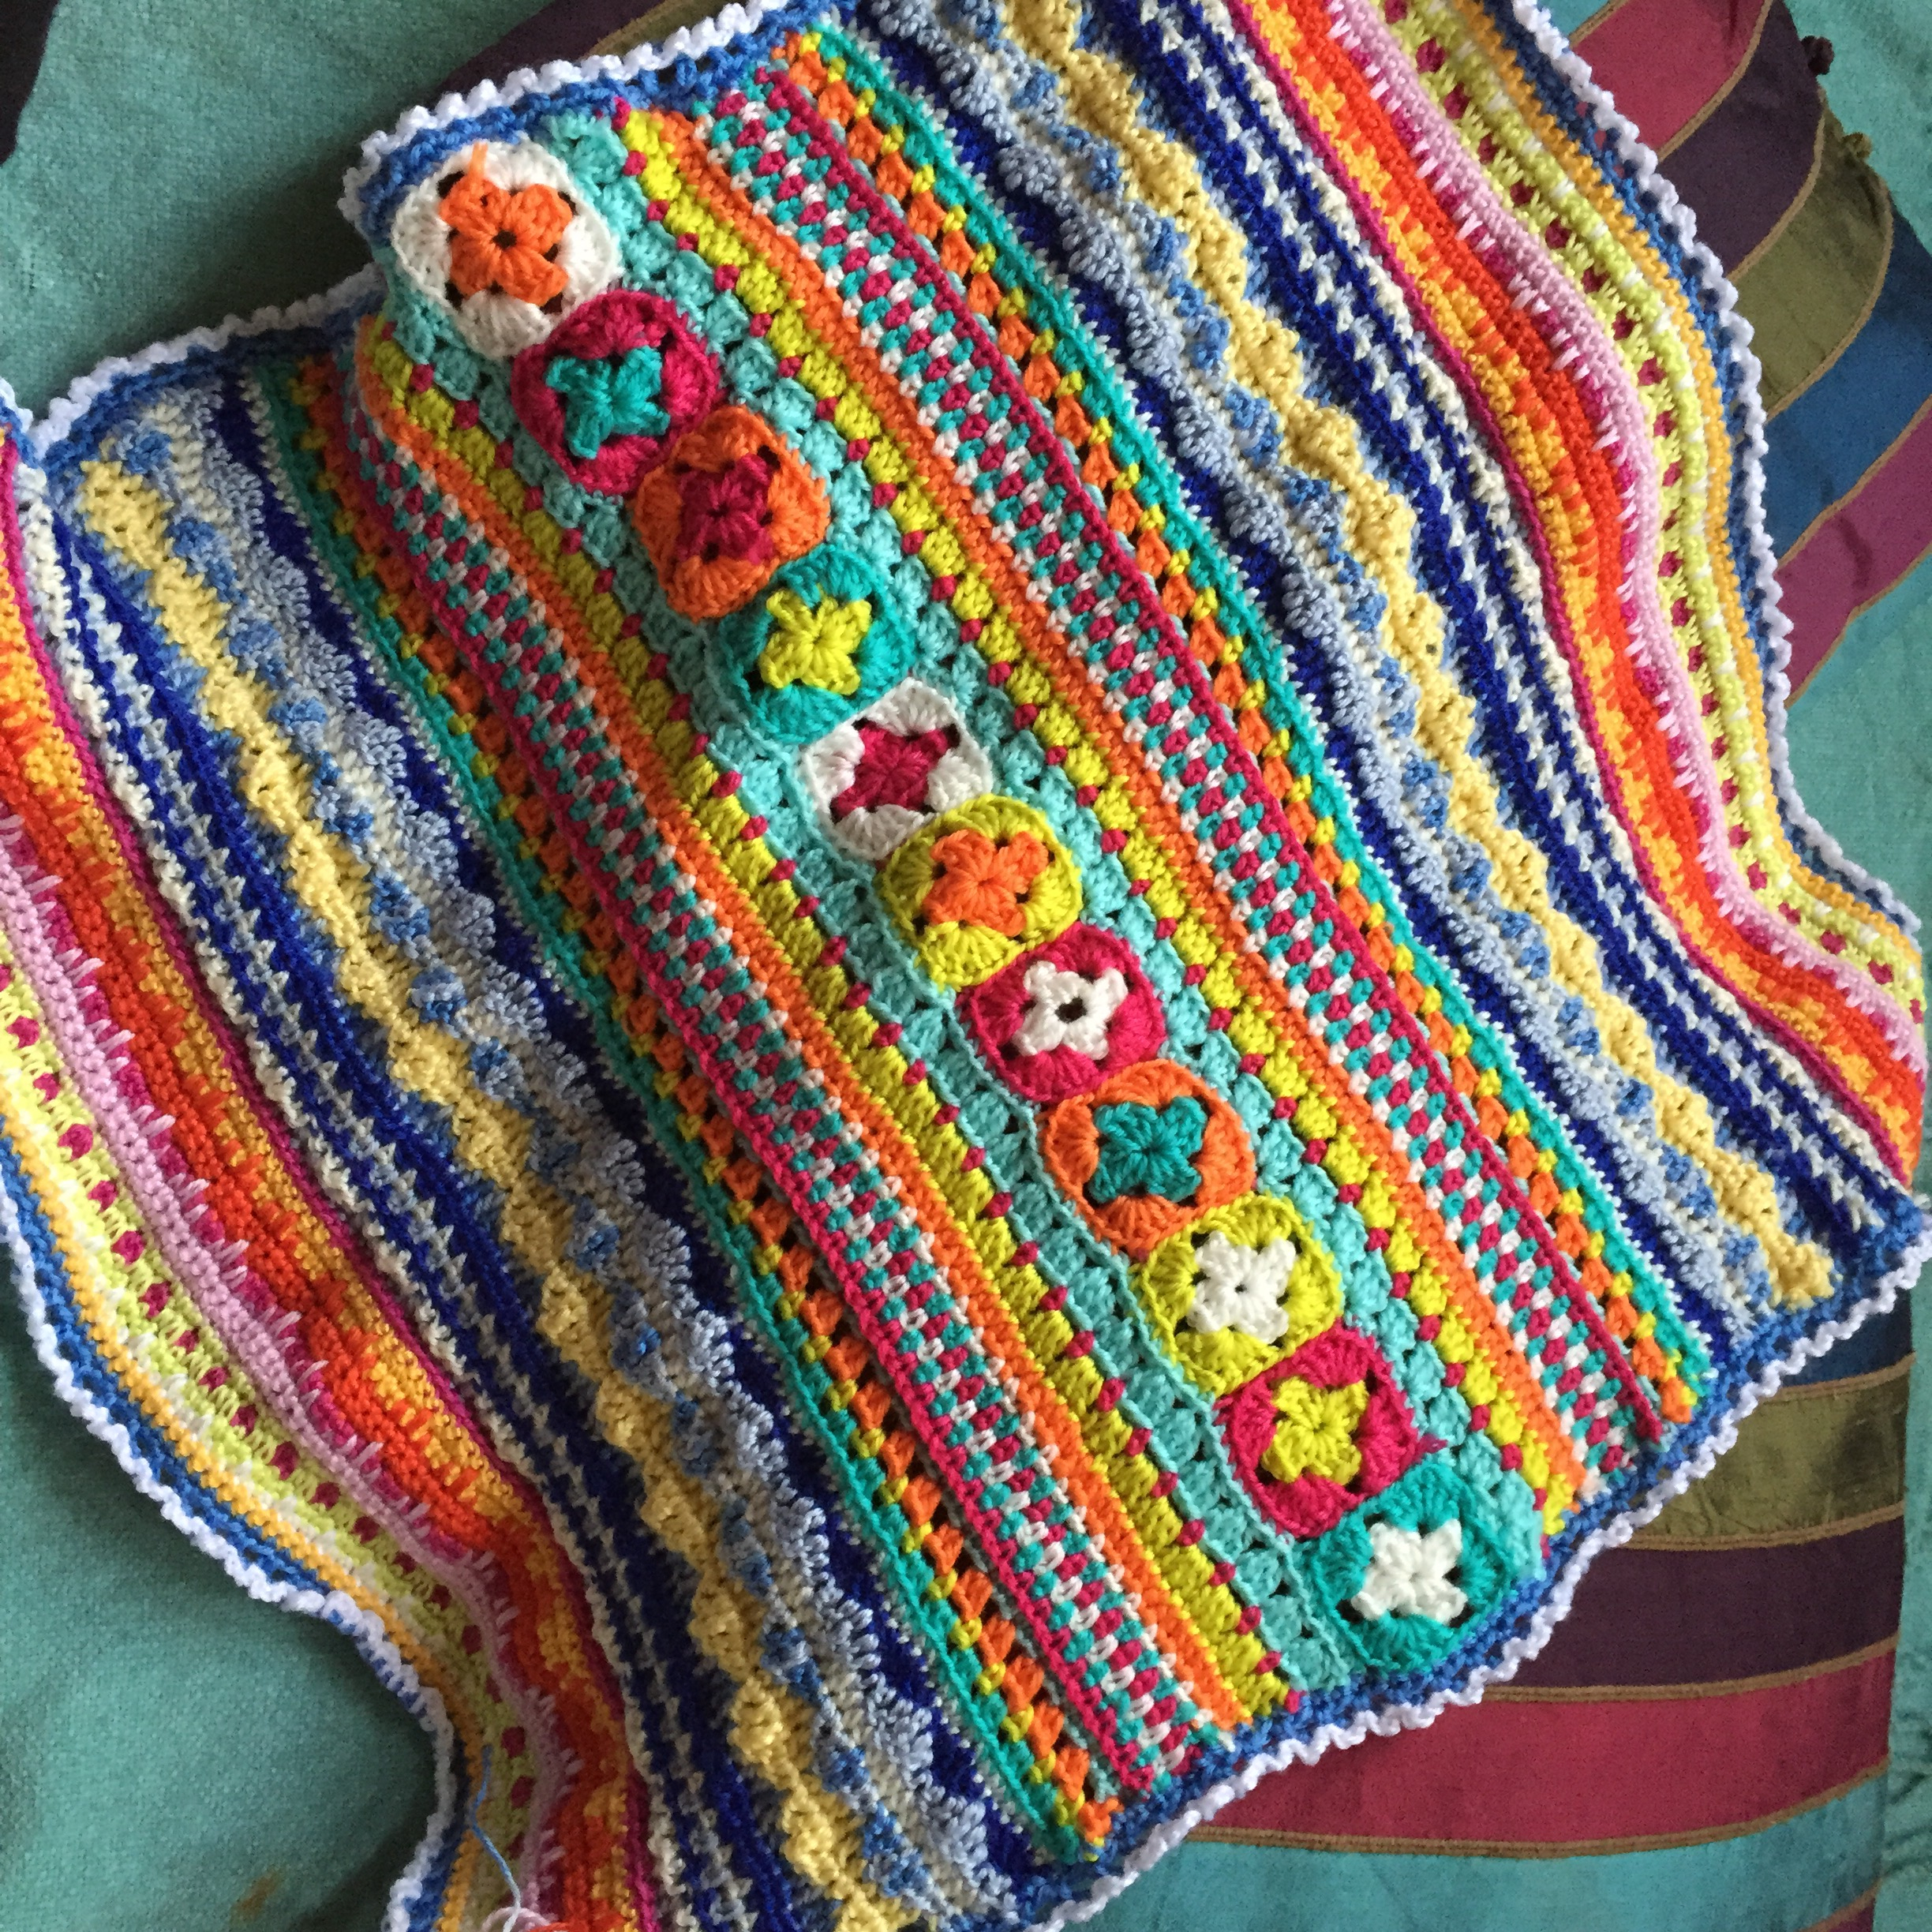 Doctor Who Crochet Blanket Pattern Crochet Sampler Blanket From Lets Get Crafting Stitch Rabbit Run